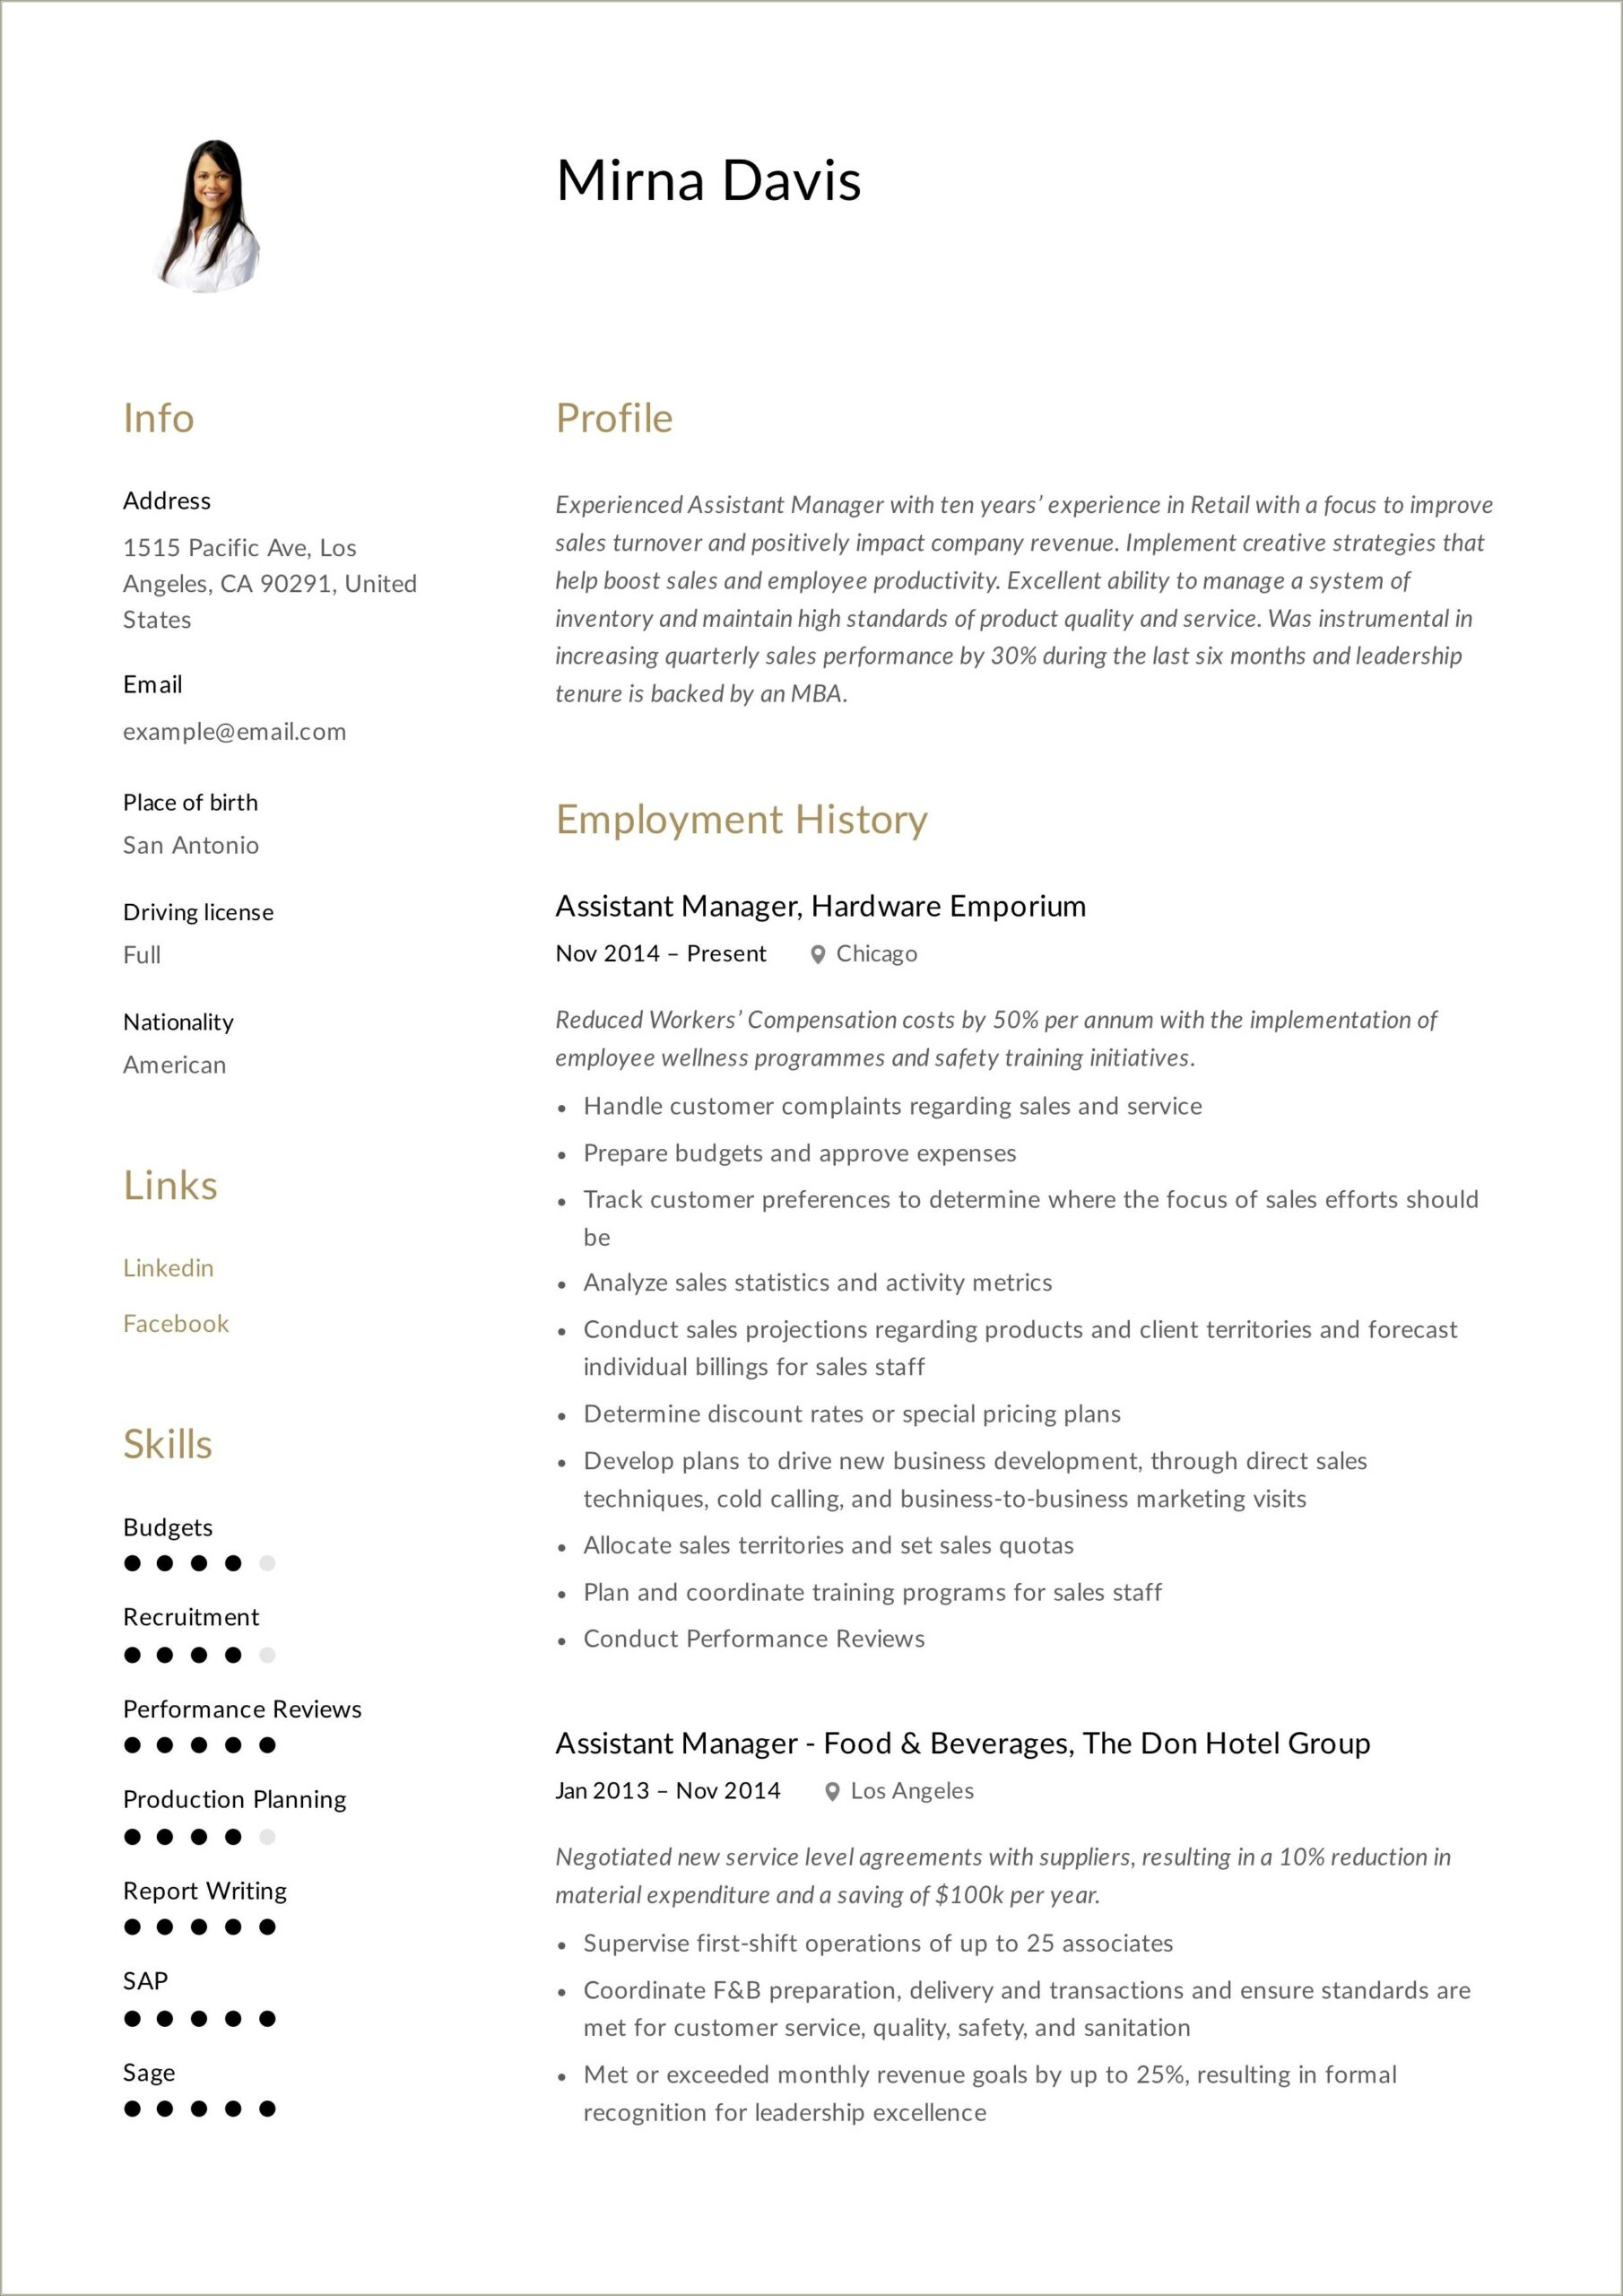 Oil Company Assistant Manager Job Description For Resume